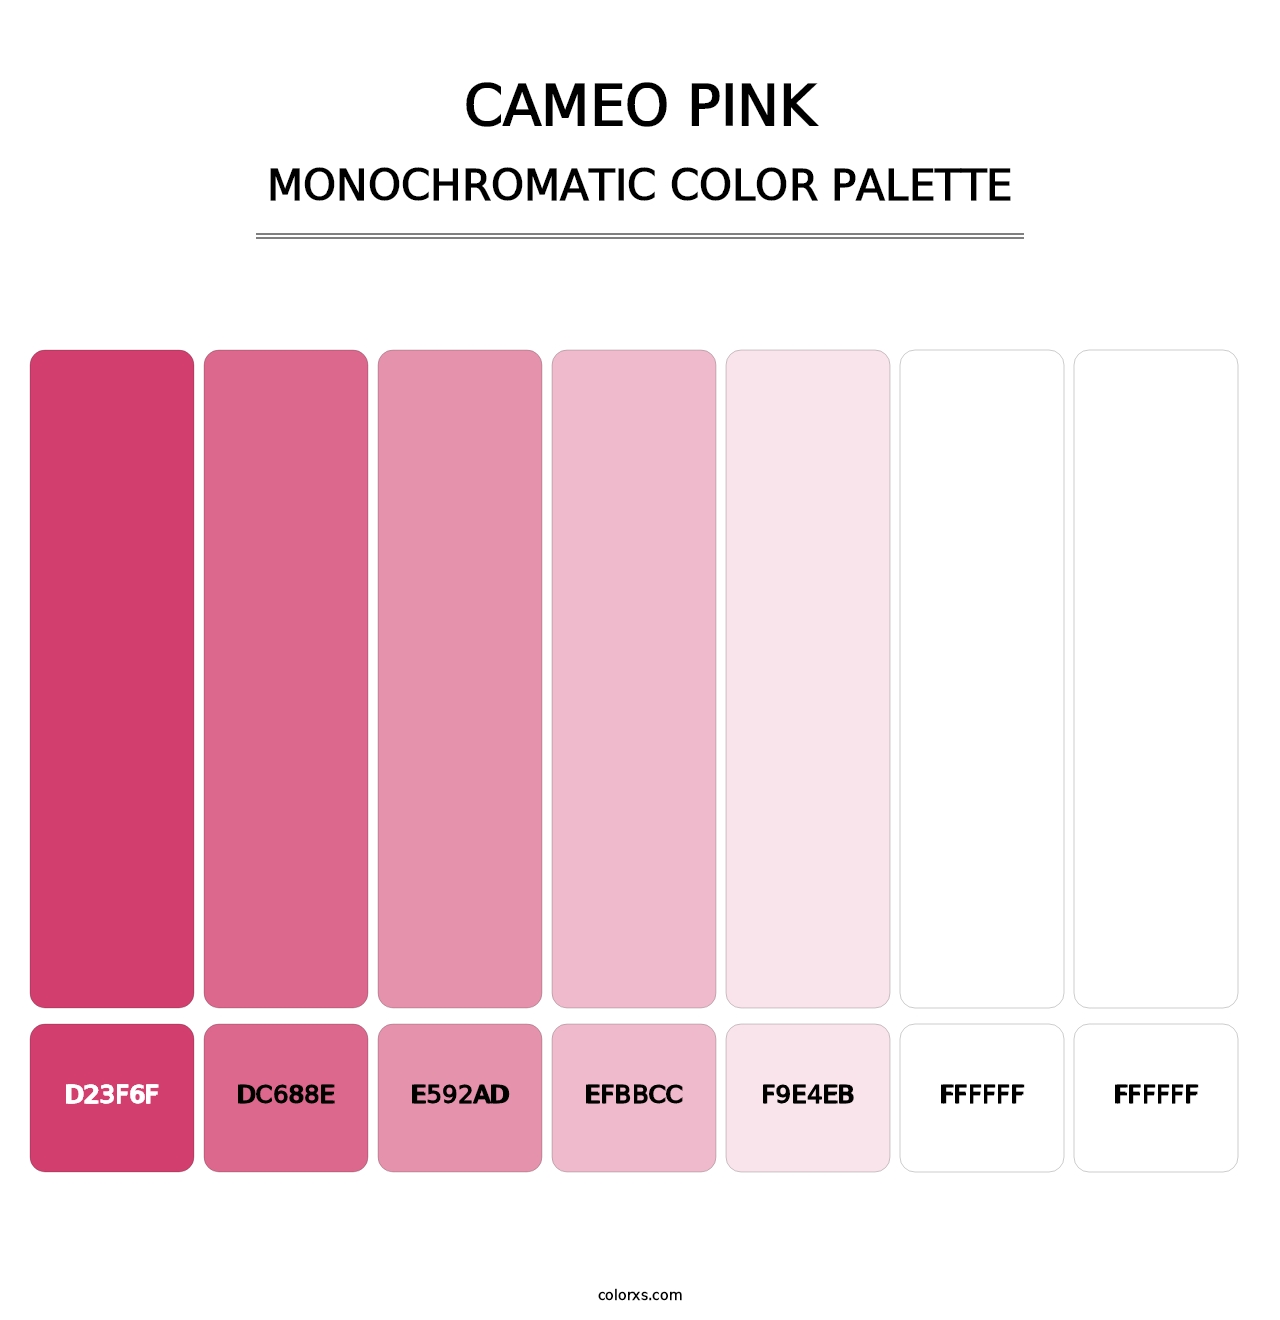 Cameo Pink - Monochromatic Color Palette